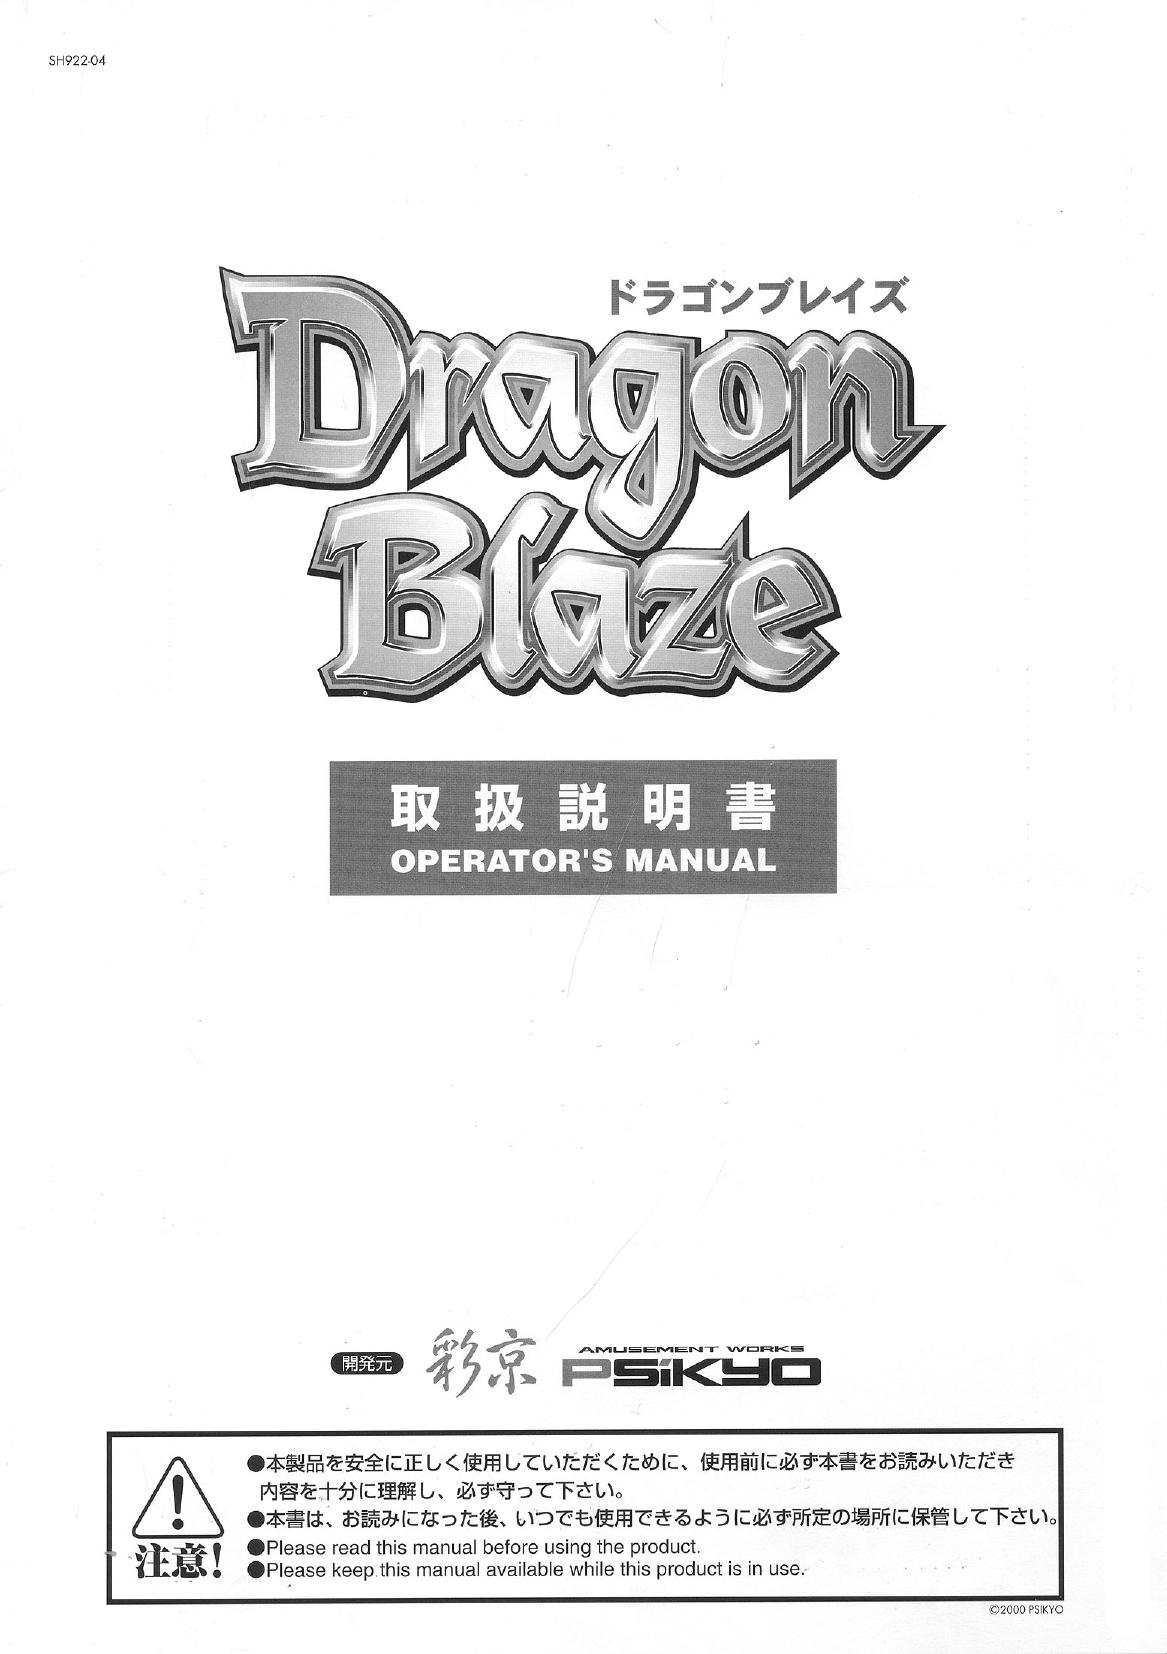 Dragon Blaze